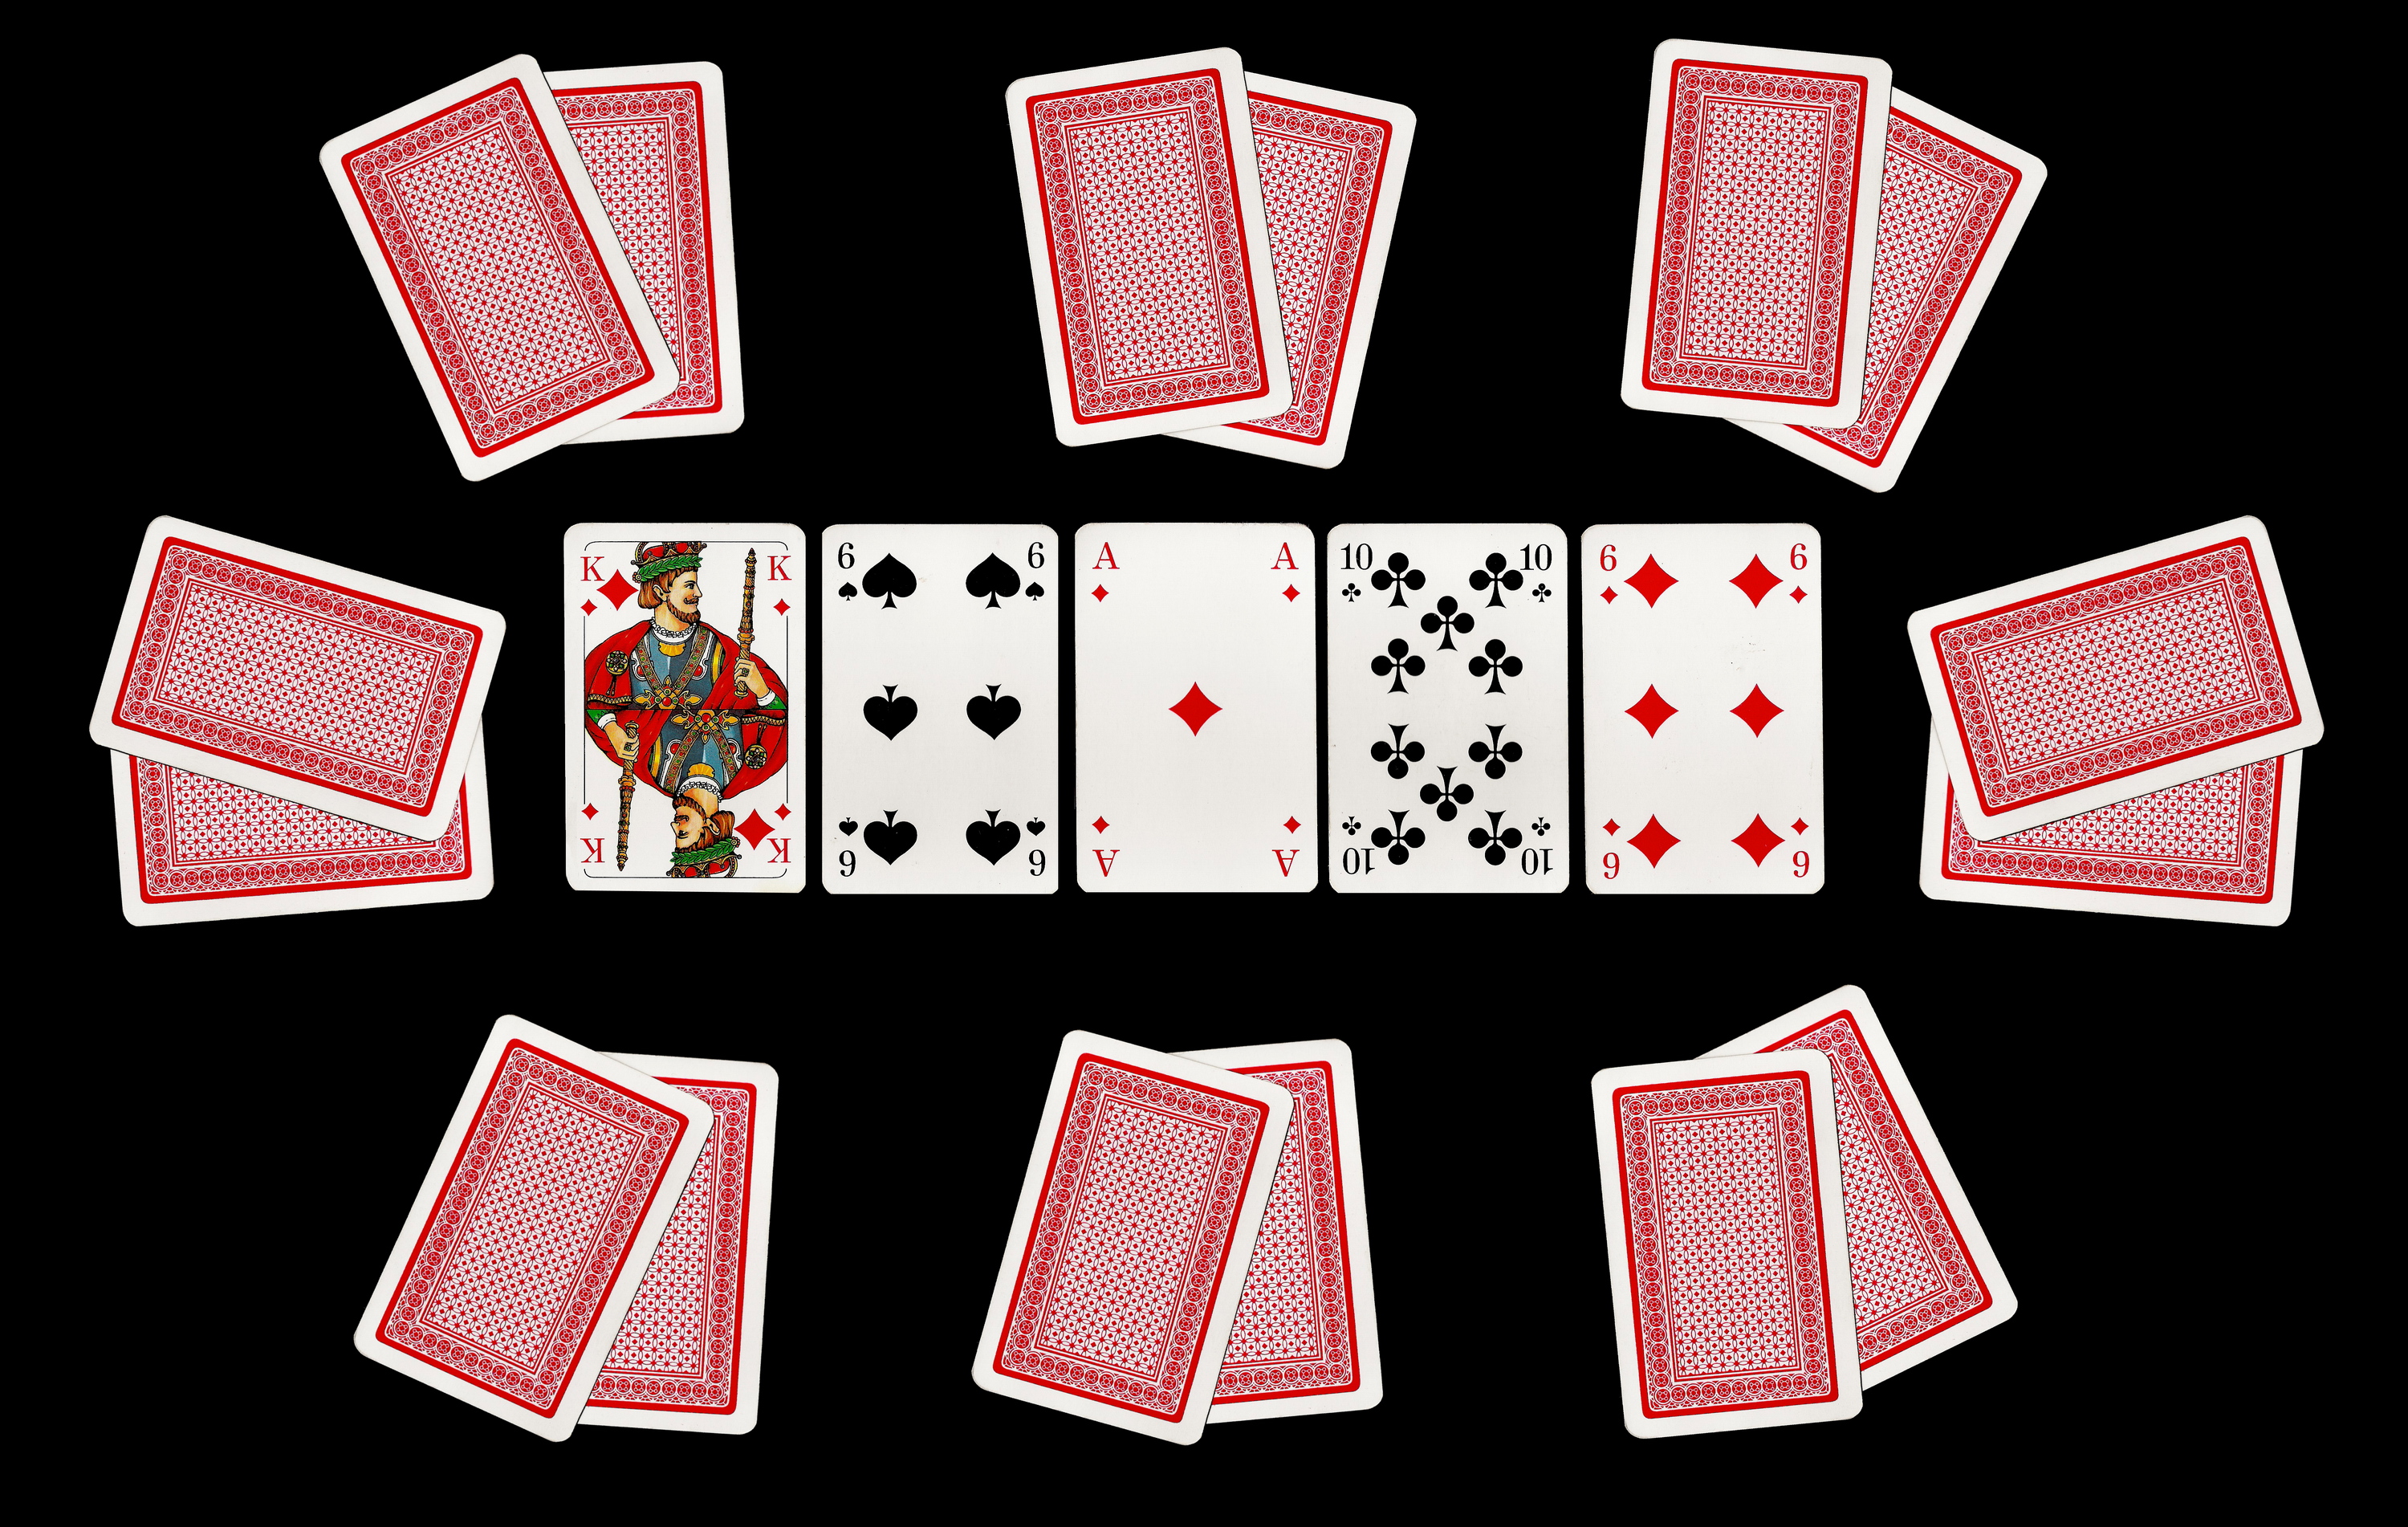 2. Profiling Poker Players At 7Bit Casino